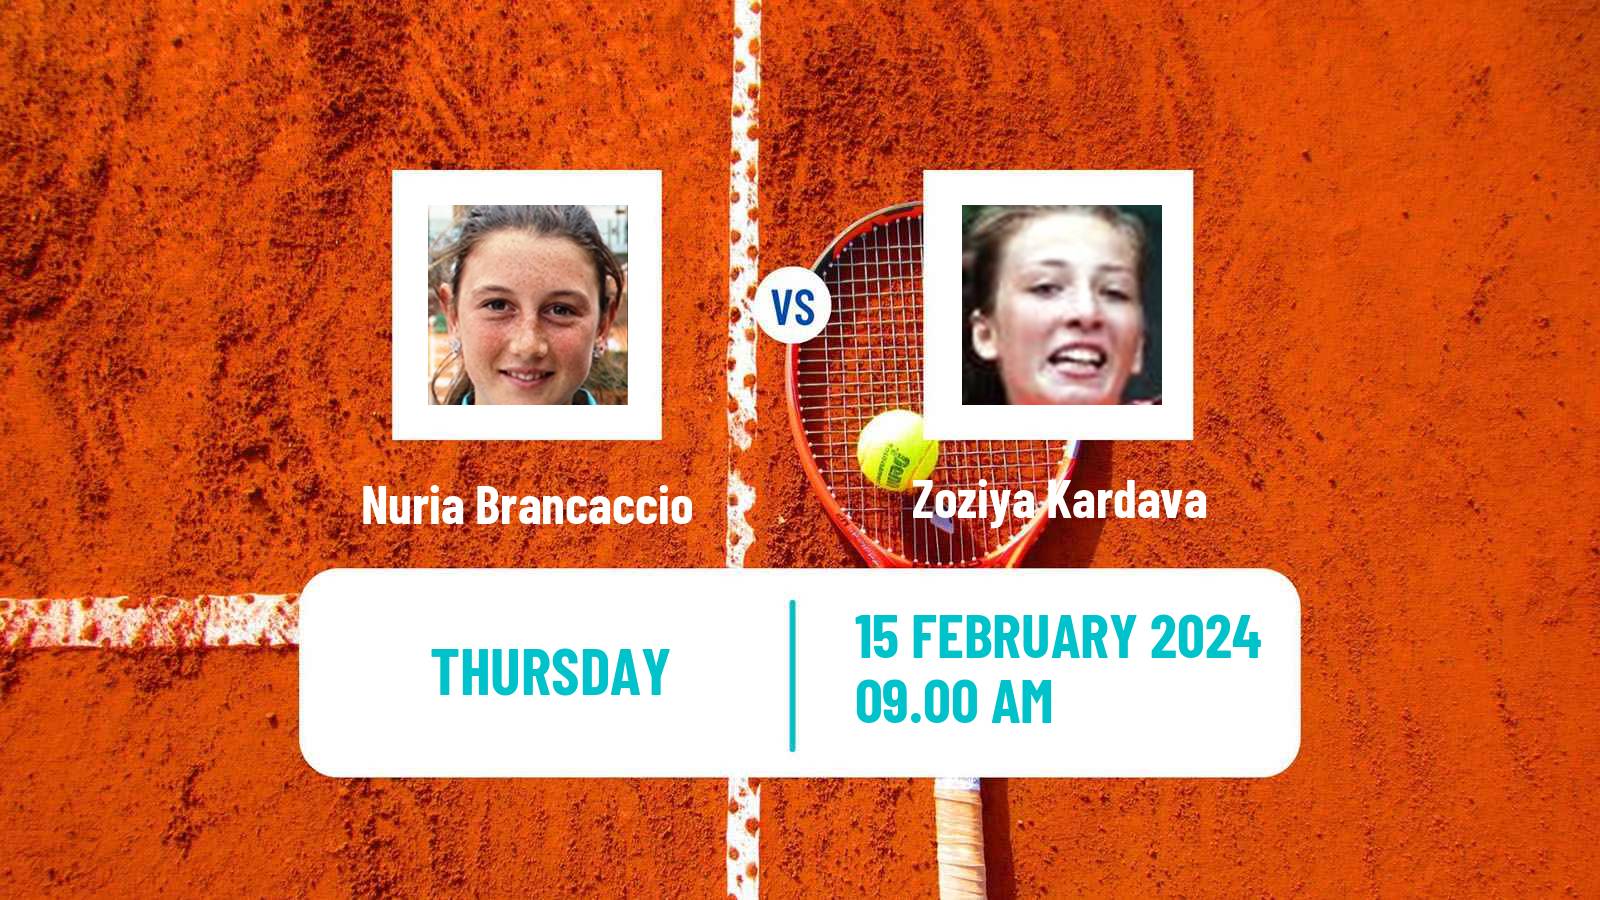 Tennis ITF W35 Antalya 3 Women Nuria Brancaccio - Zoziya Kardava